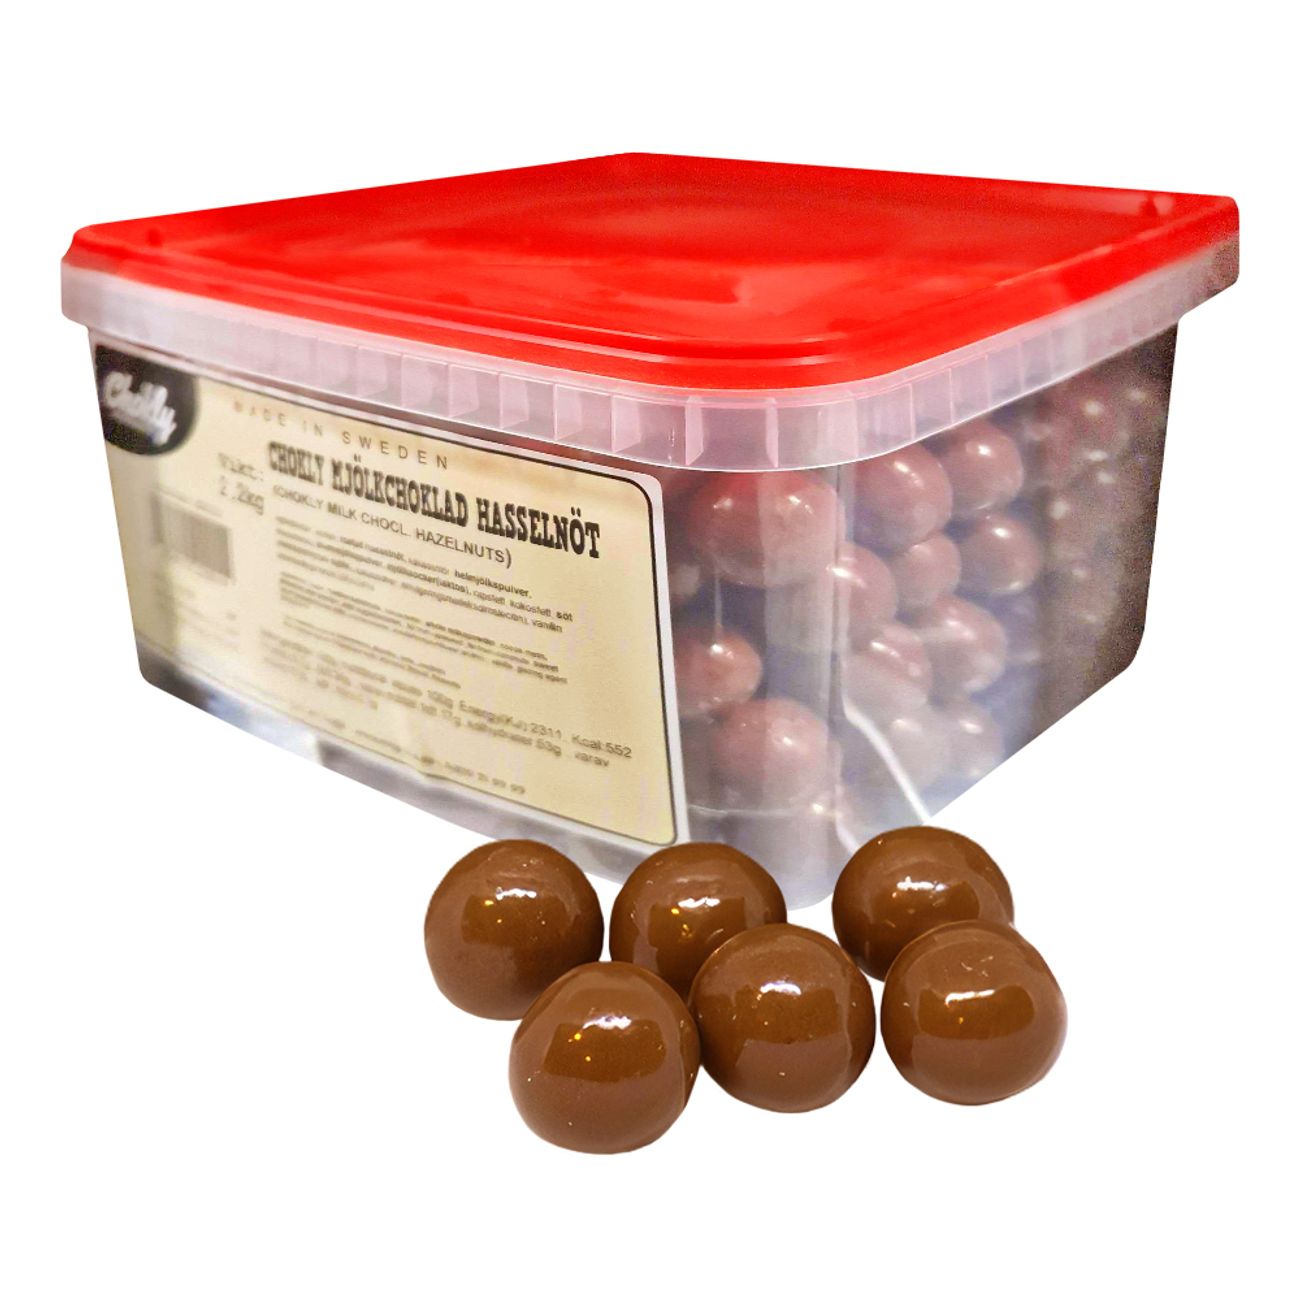 chokly-mjolkchoklad-hasselnot-storpack-100997-1